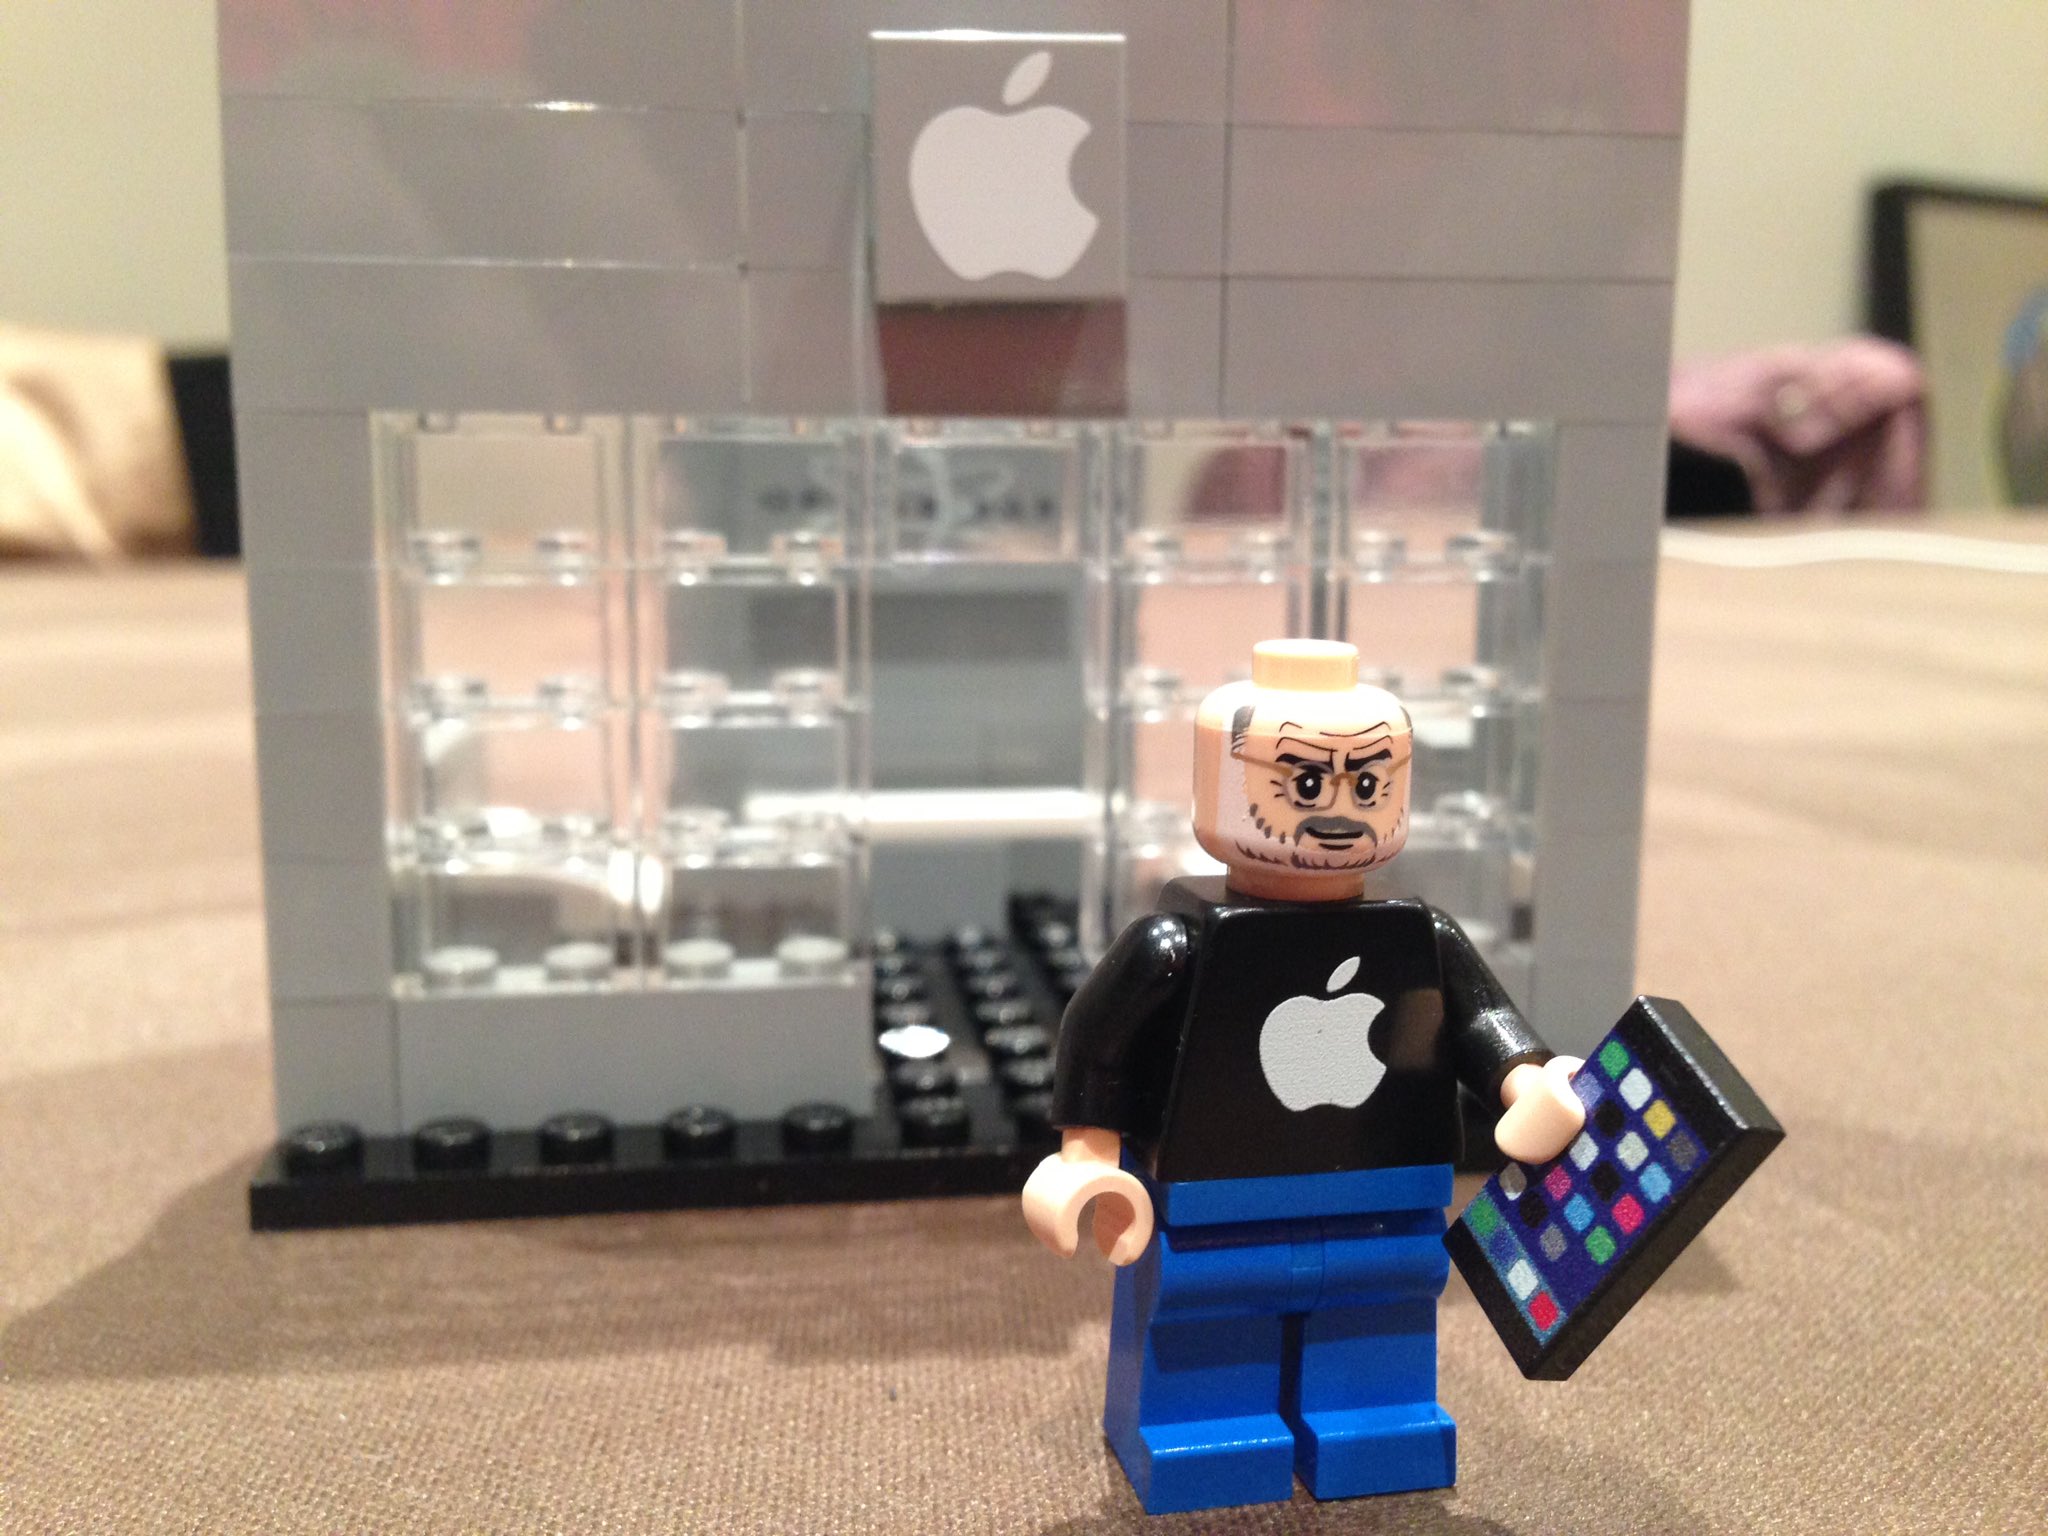 Minifigures Display on Twitter: "Fantastic! @BrickBoxClub Apple Steve Jobs minifigure https://t.co/eILwBHcZms" / Twitter